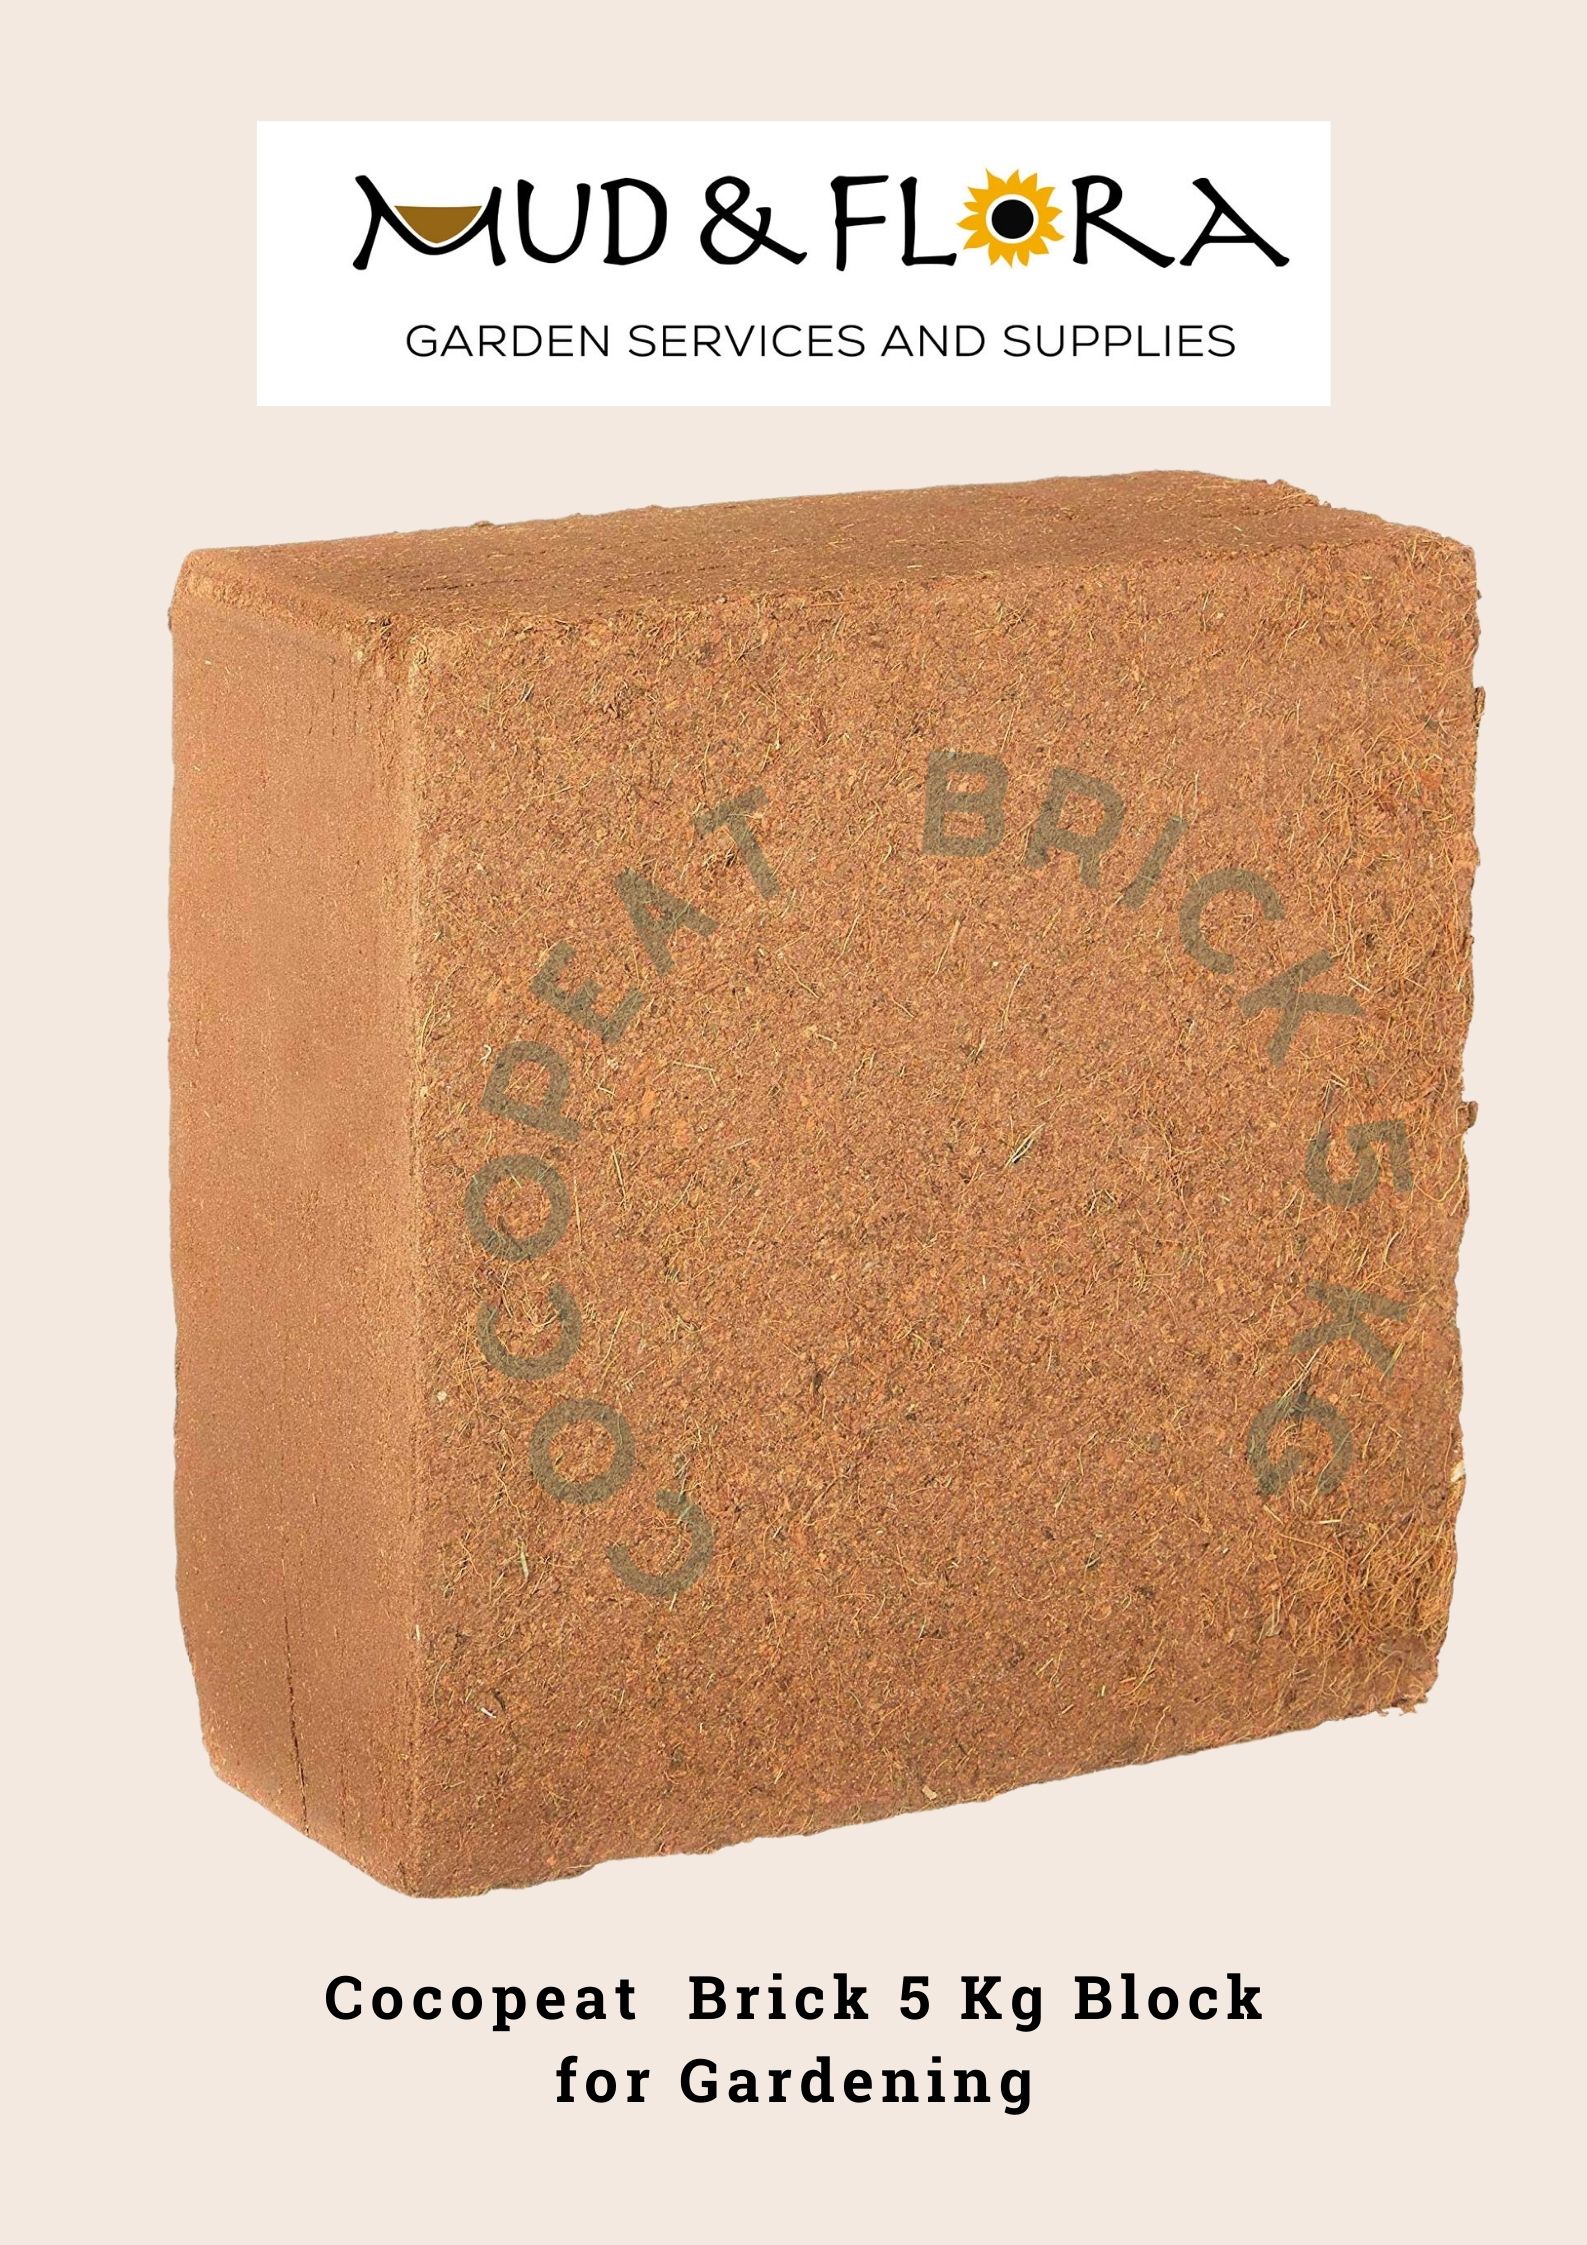 Cocopeat Brick 5 Kg Block for Gardening